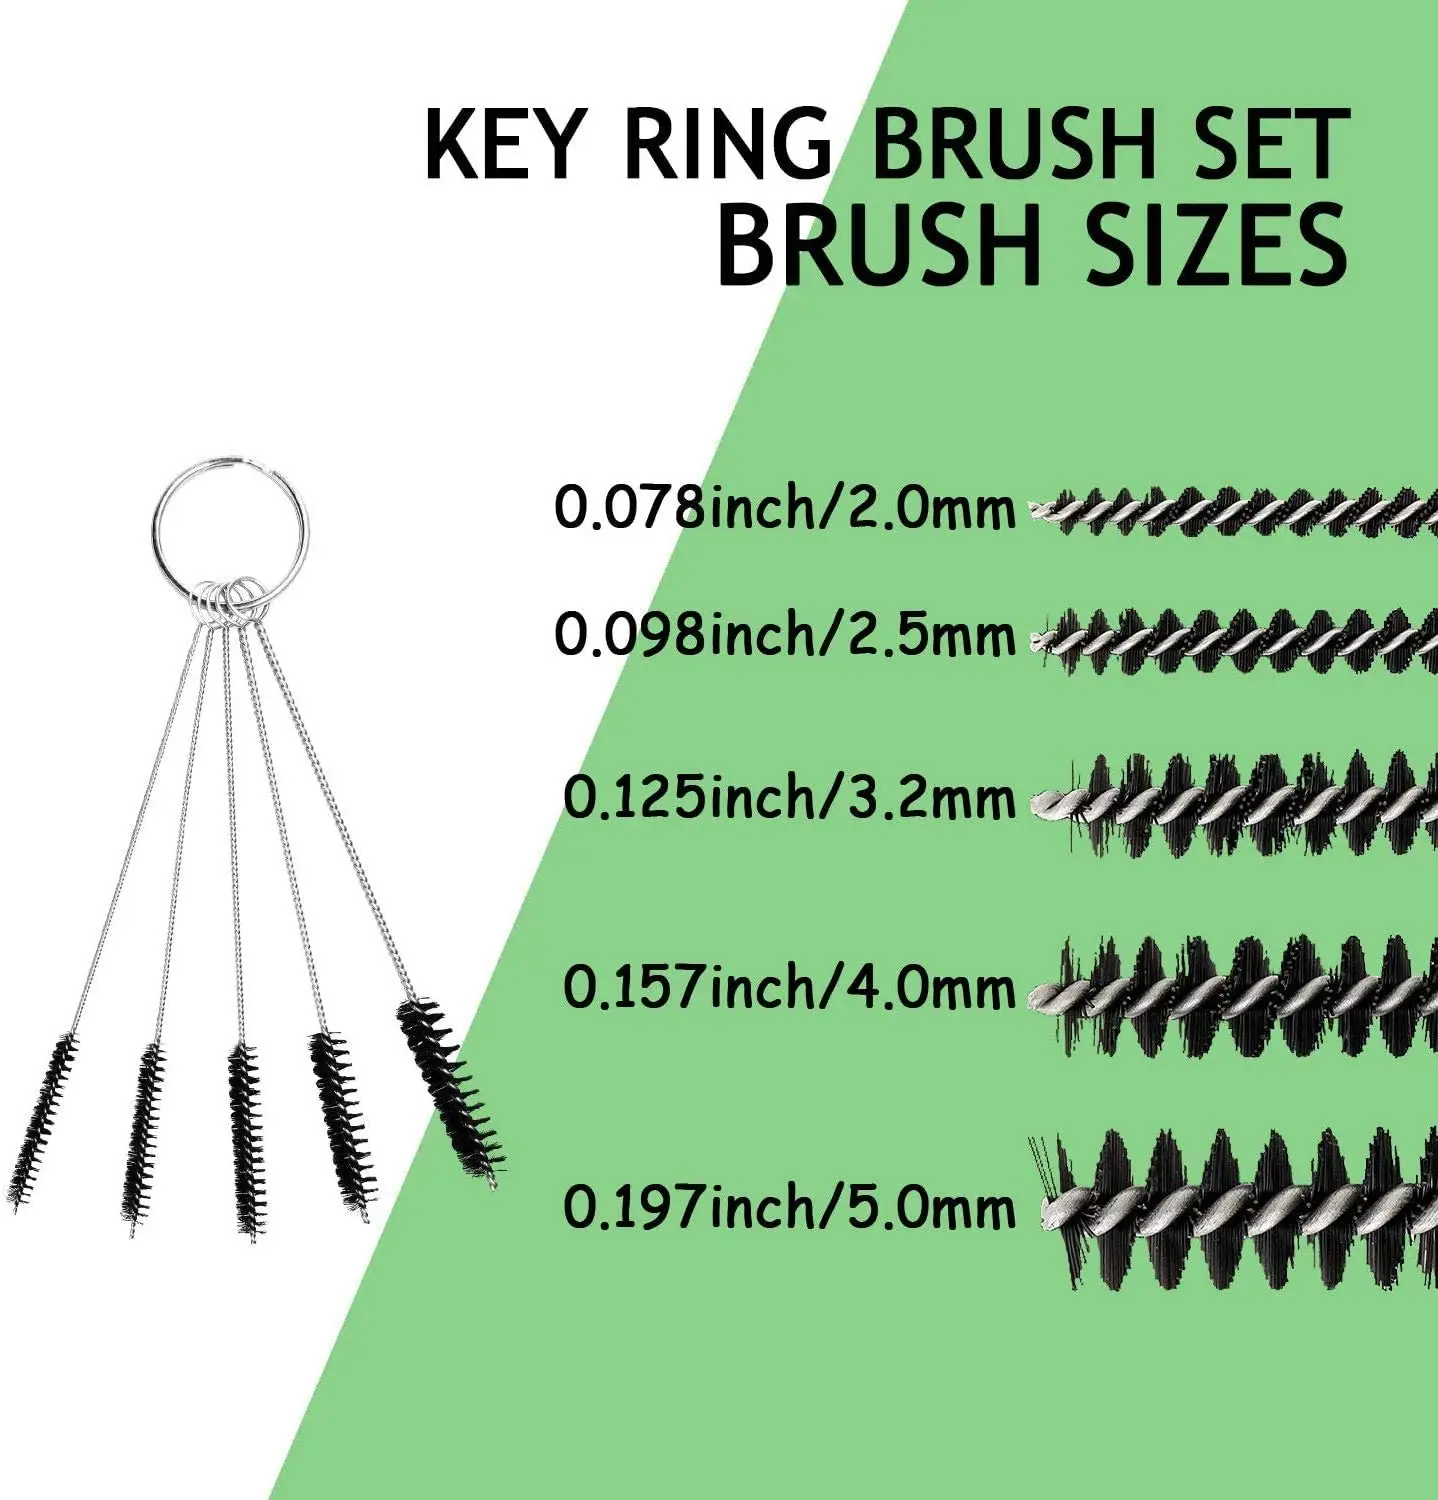 JOYSATR Airbrush Cleaning Repairing Set Includes 1 Upgraded Airbrush Repair Tool,5 Different Diameters Brushes,10 Airbrush Caps